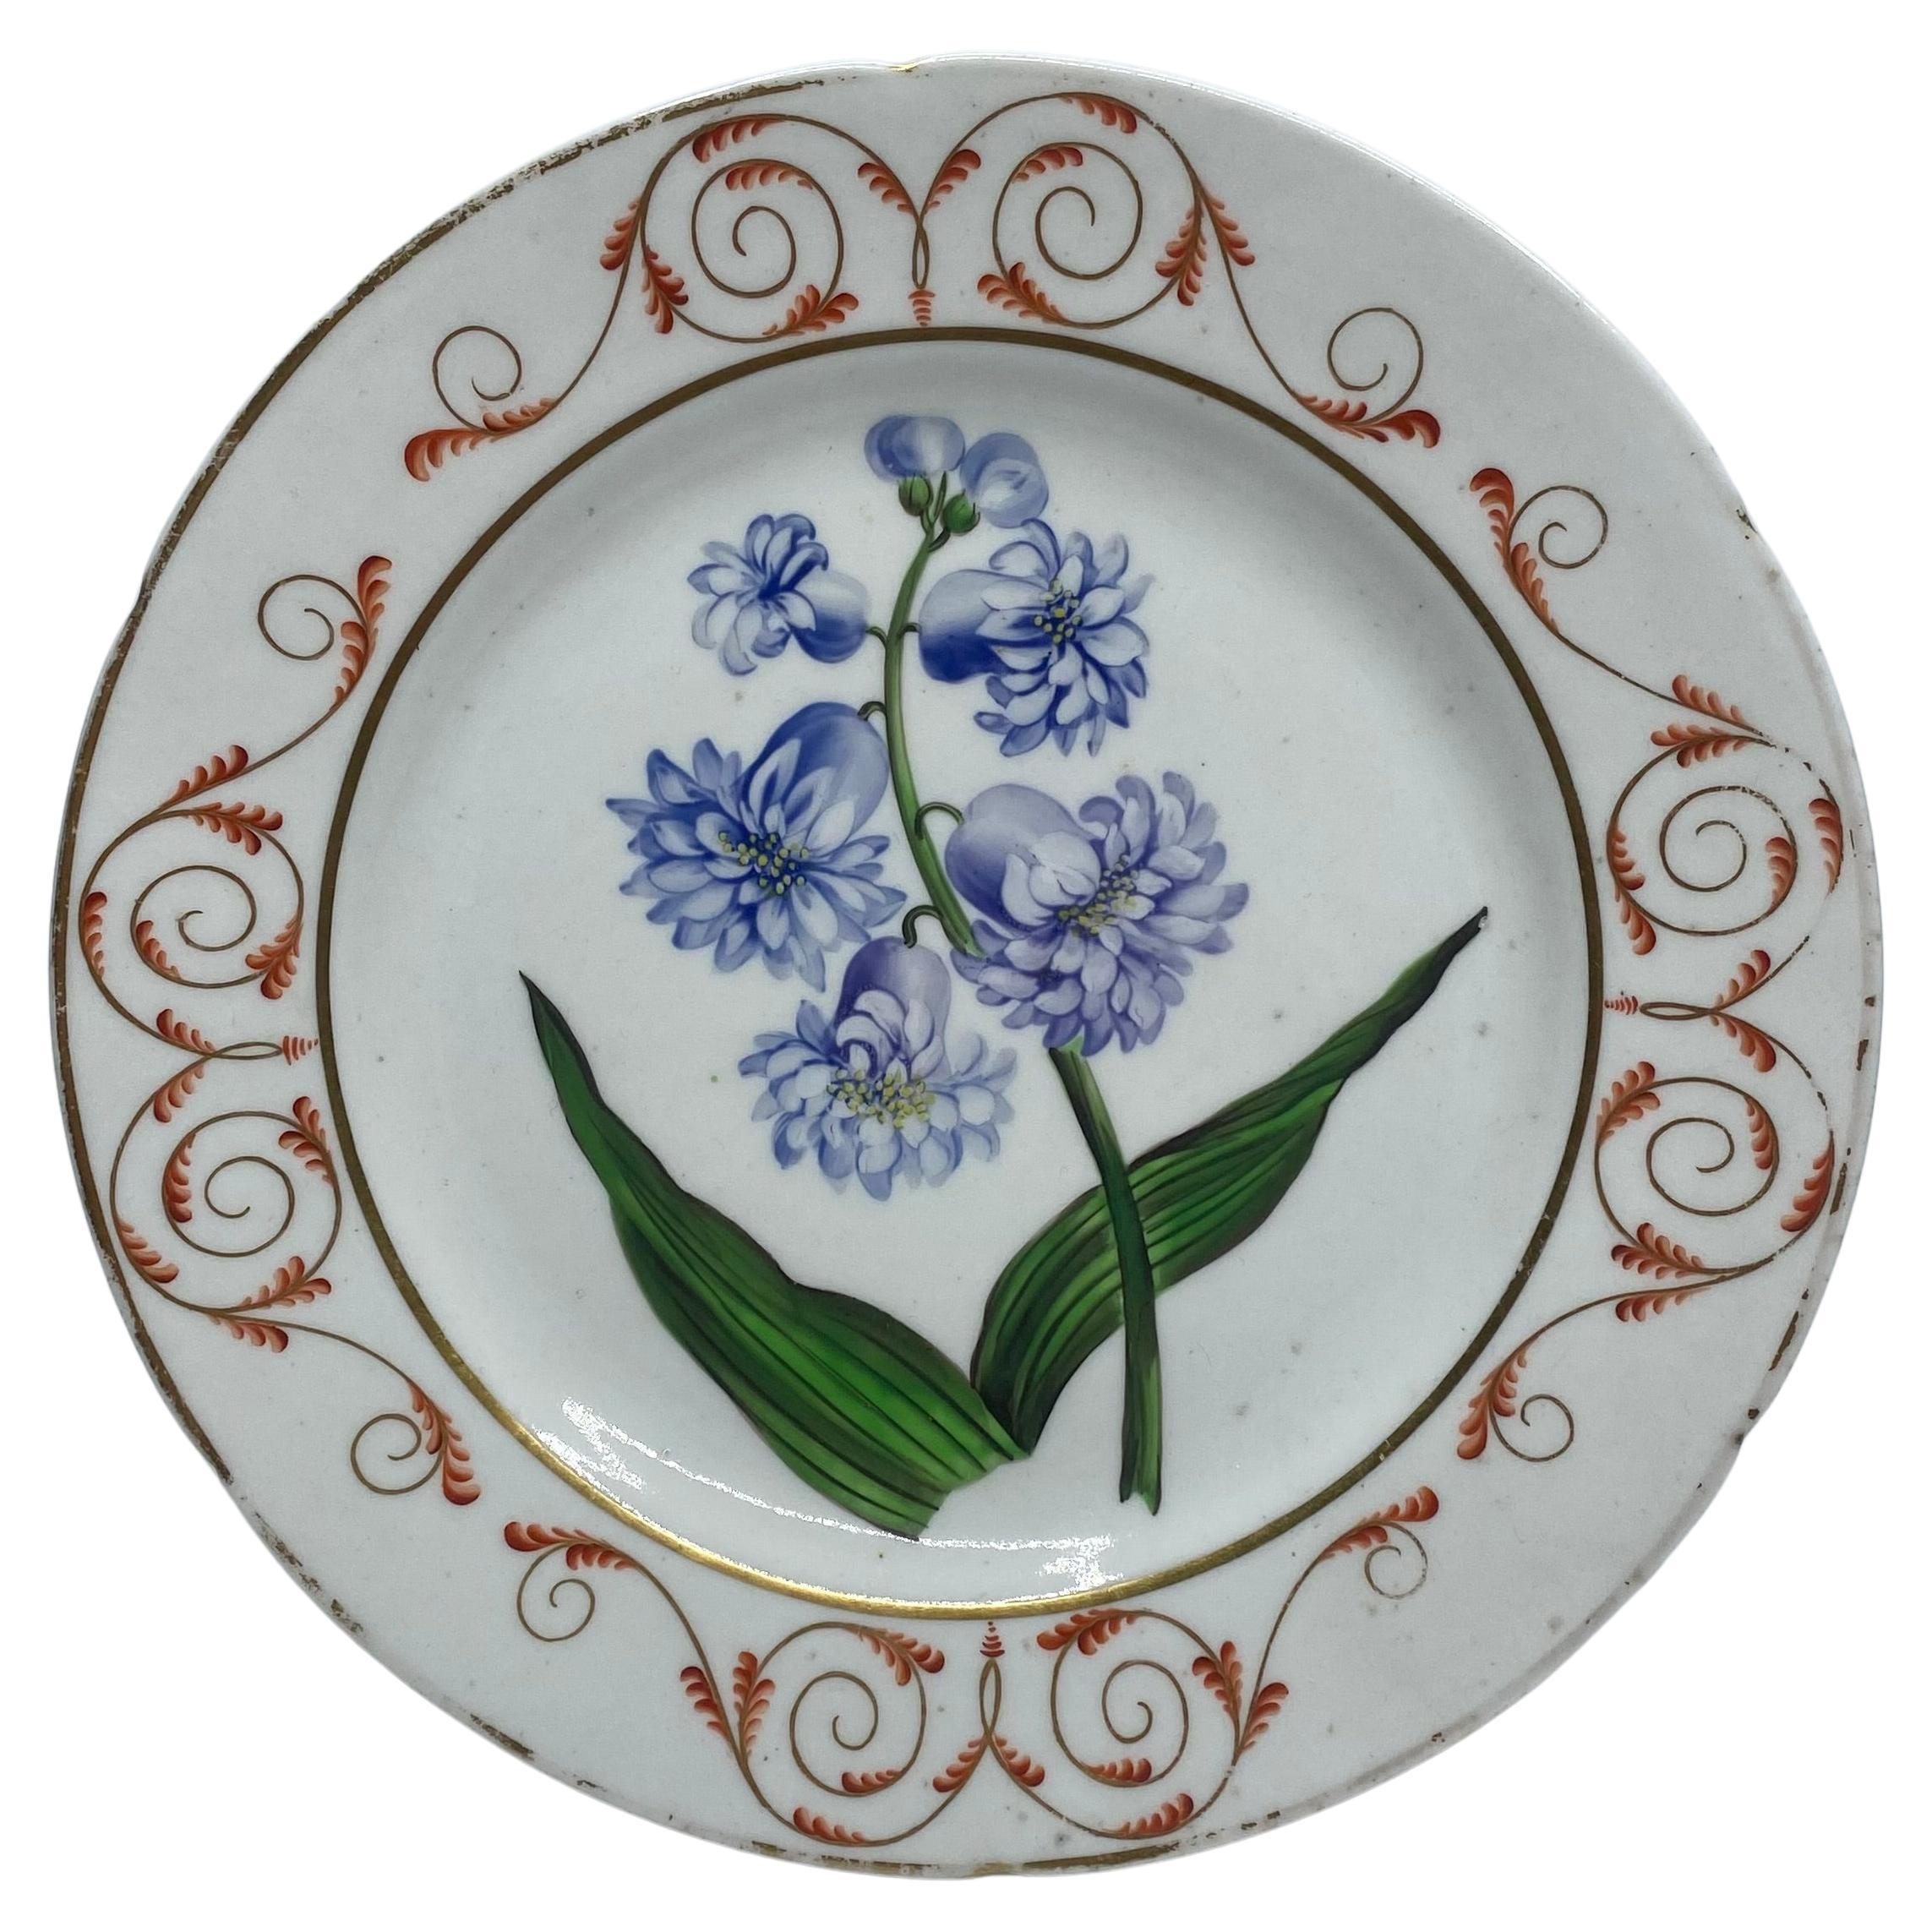 English porcelain botanical dish, ‘Hyacinth’, c. 1800